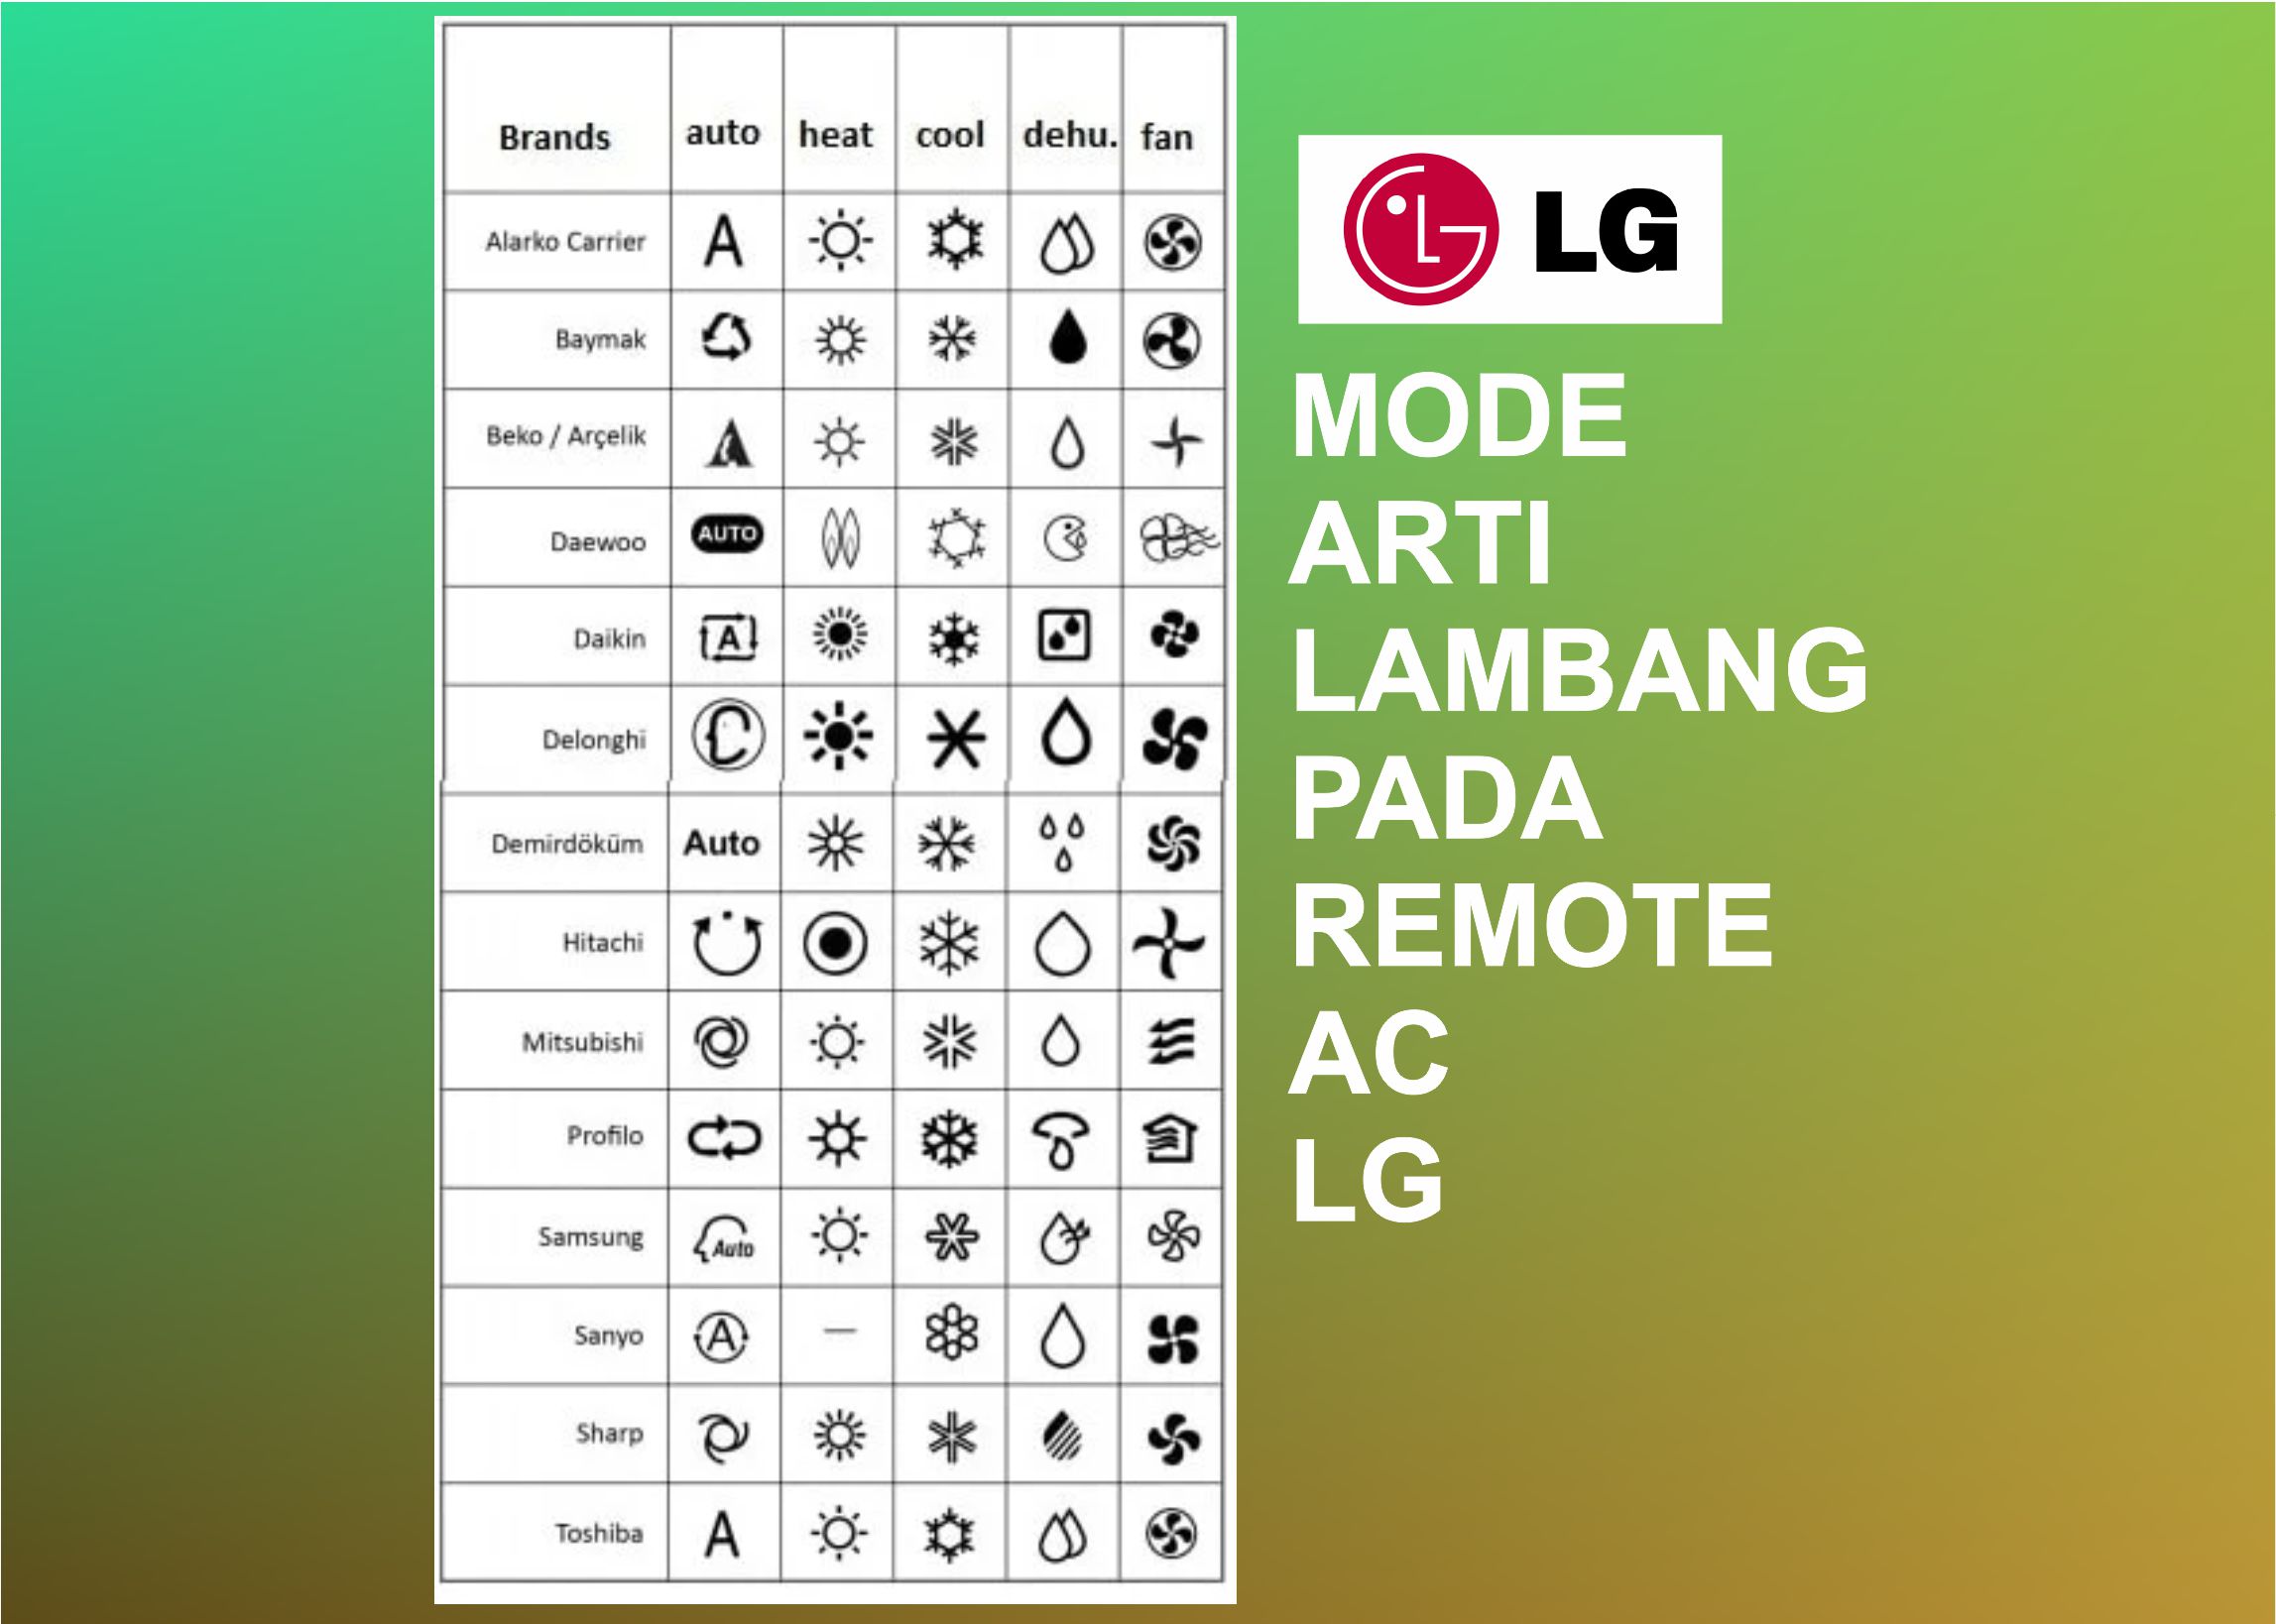 Mode Arti Lambang pada Remote AC LG